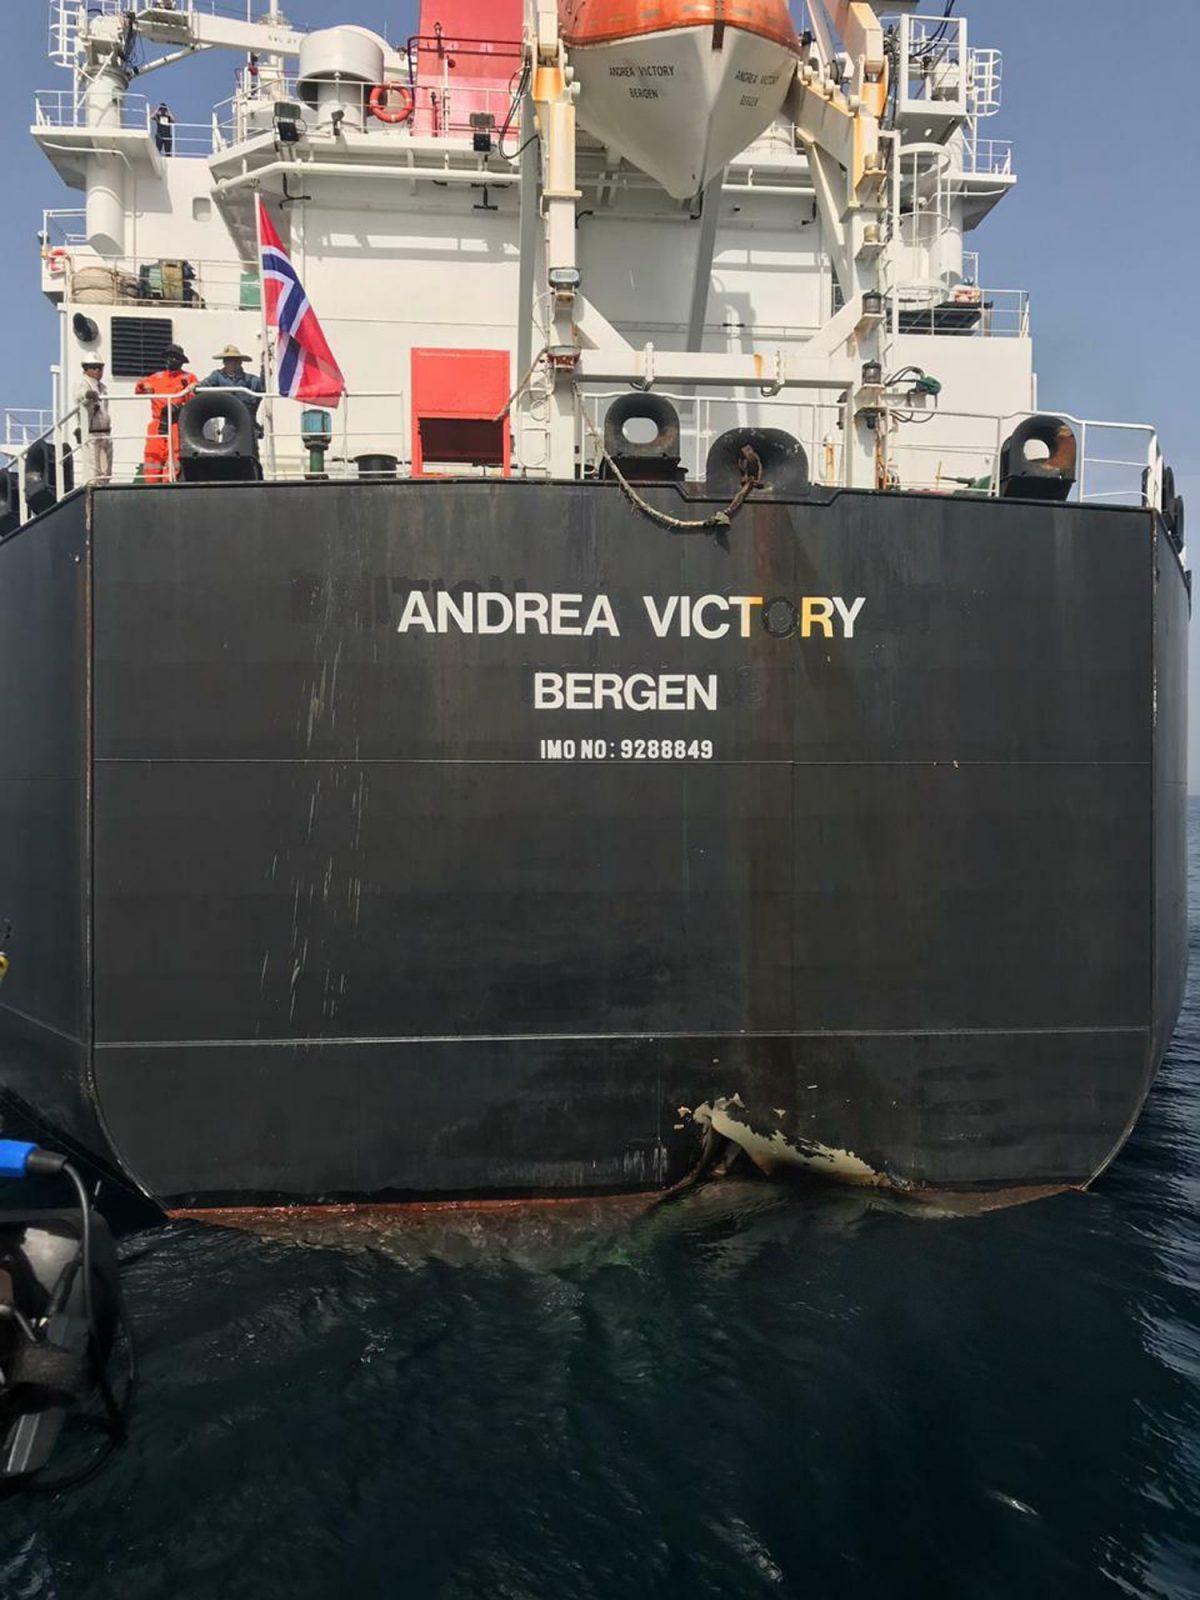 The Norwegian-flagged oil tanker MT Andrea Victory off the coast of Fujairah, United Arab Emirates, on May 13, 2019. (United Arab Emirates National Media Council via AP)